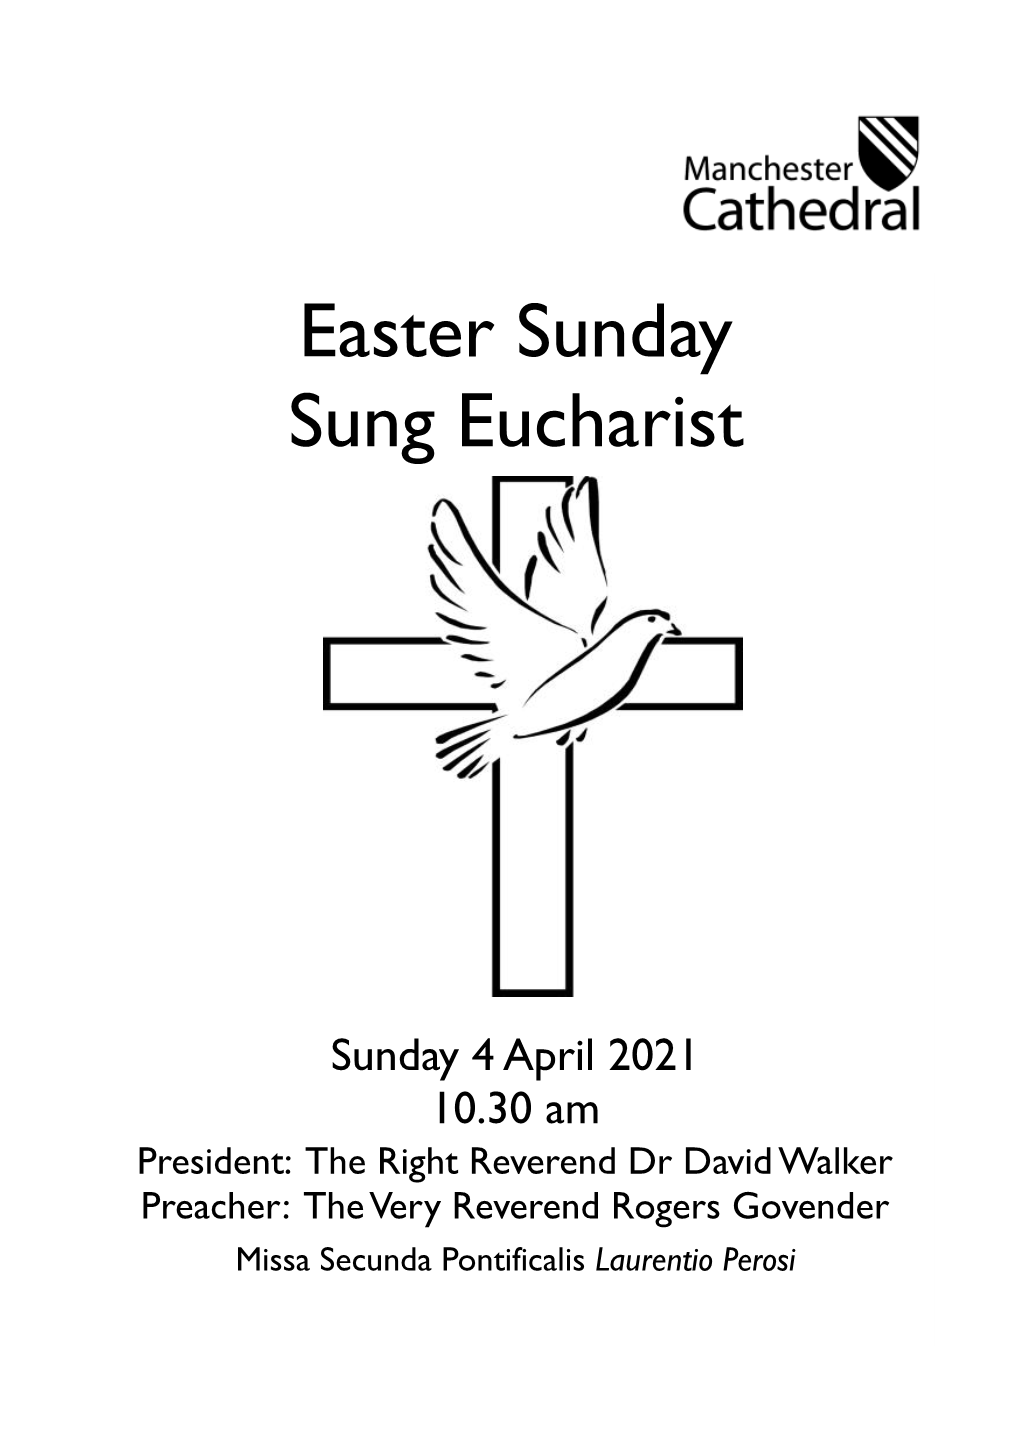 Easter Sunday Sung Eucharist